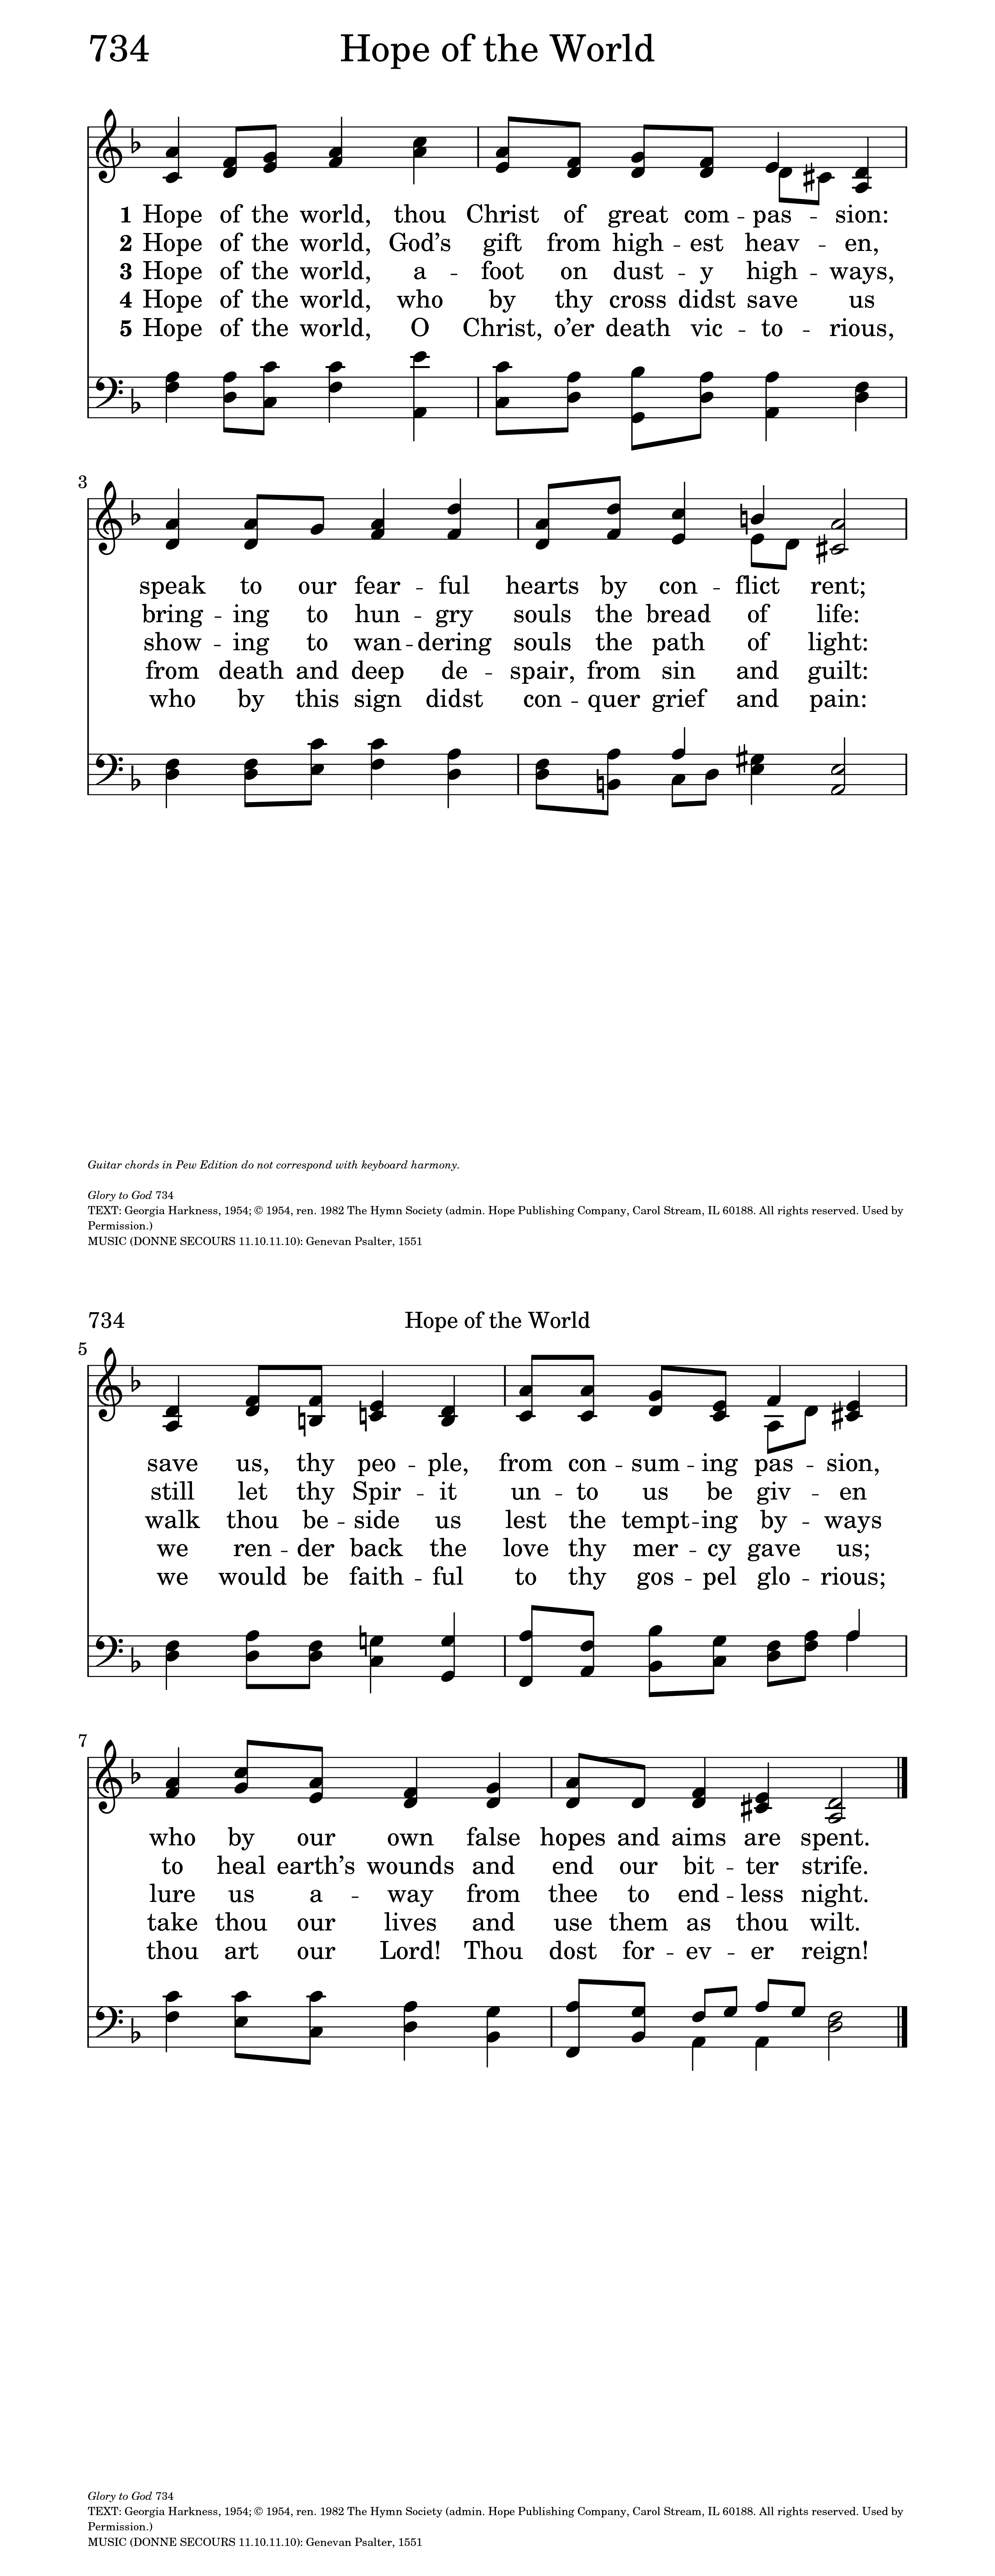 Songs for the Social LYRICS Sheet 302 USA American Lutheran